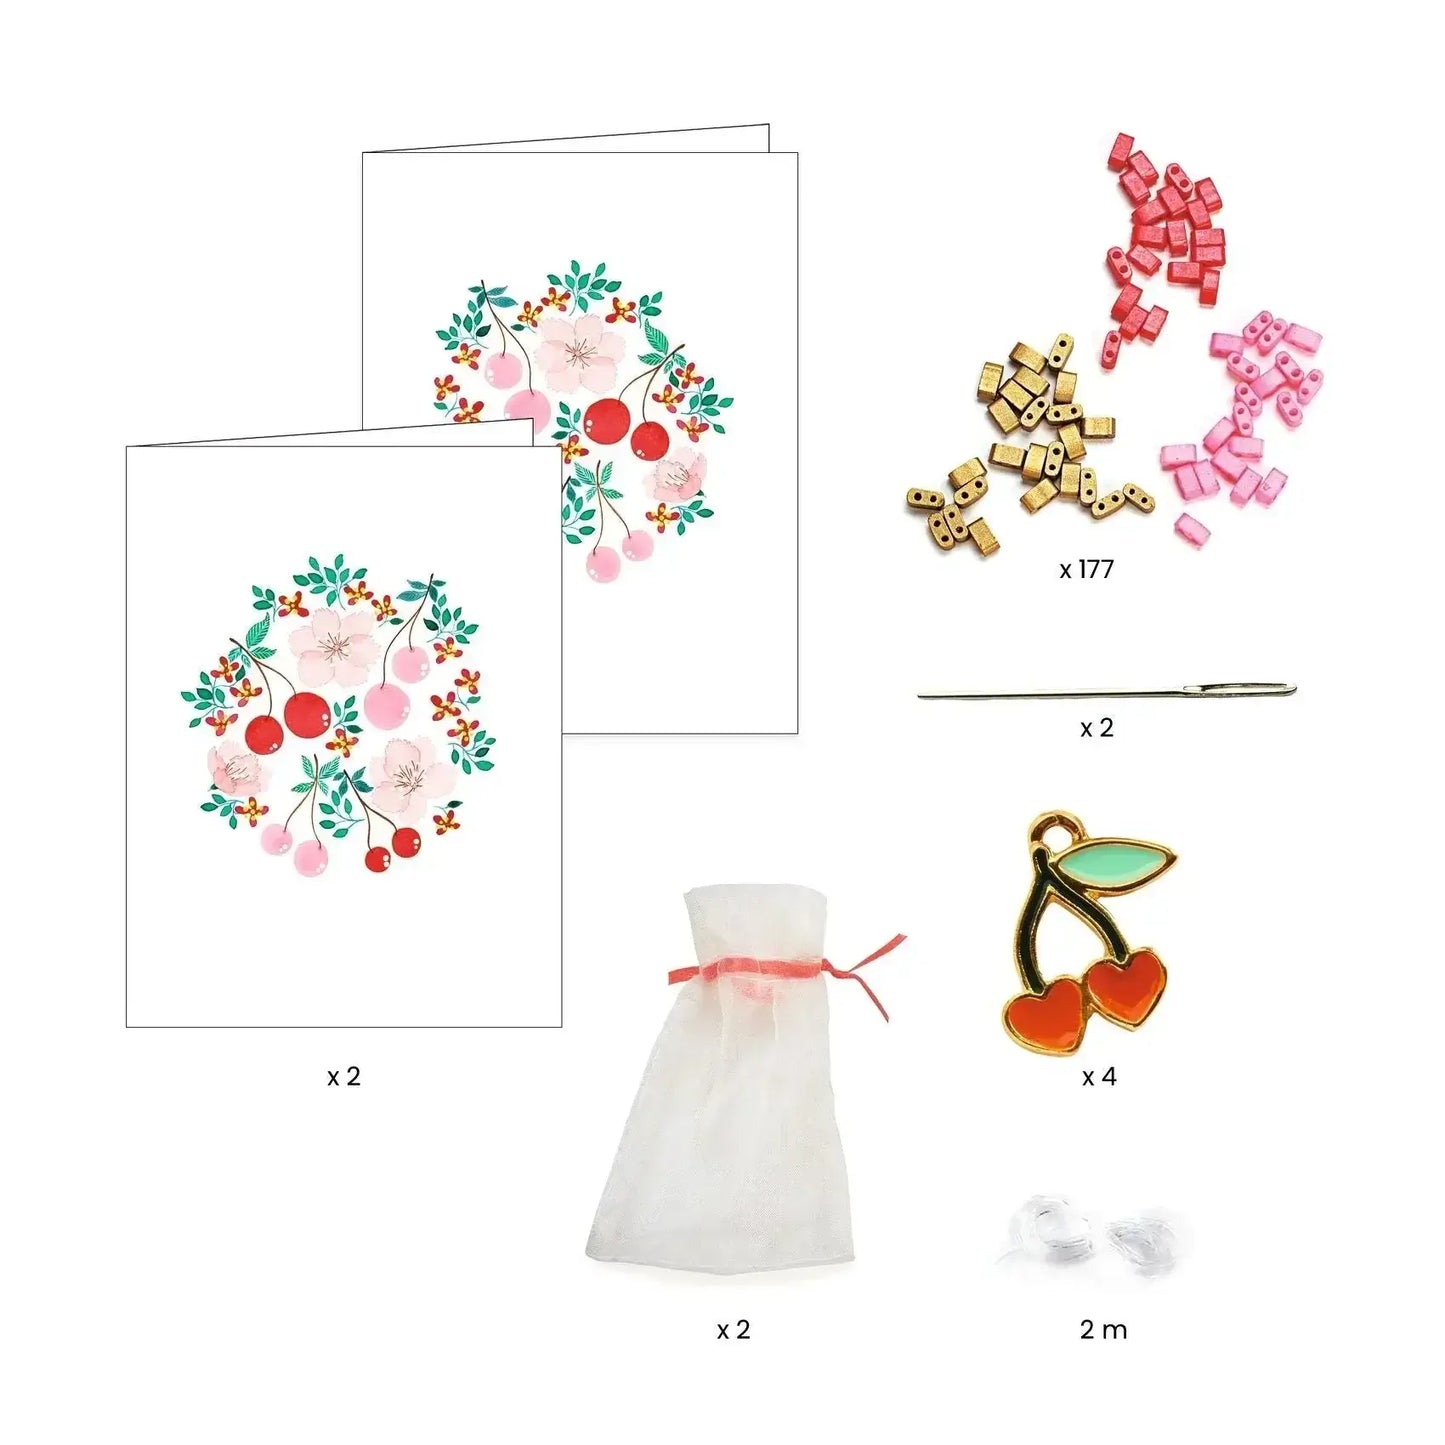 Beads and Jewelry Tila and Cherries Art Kit